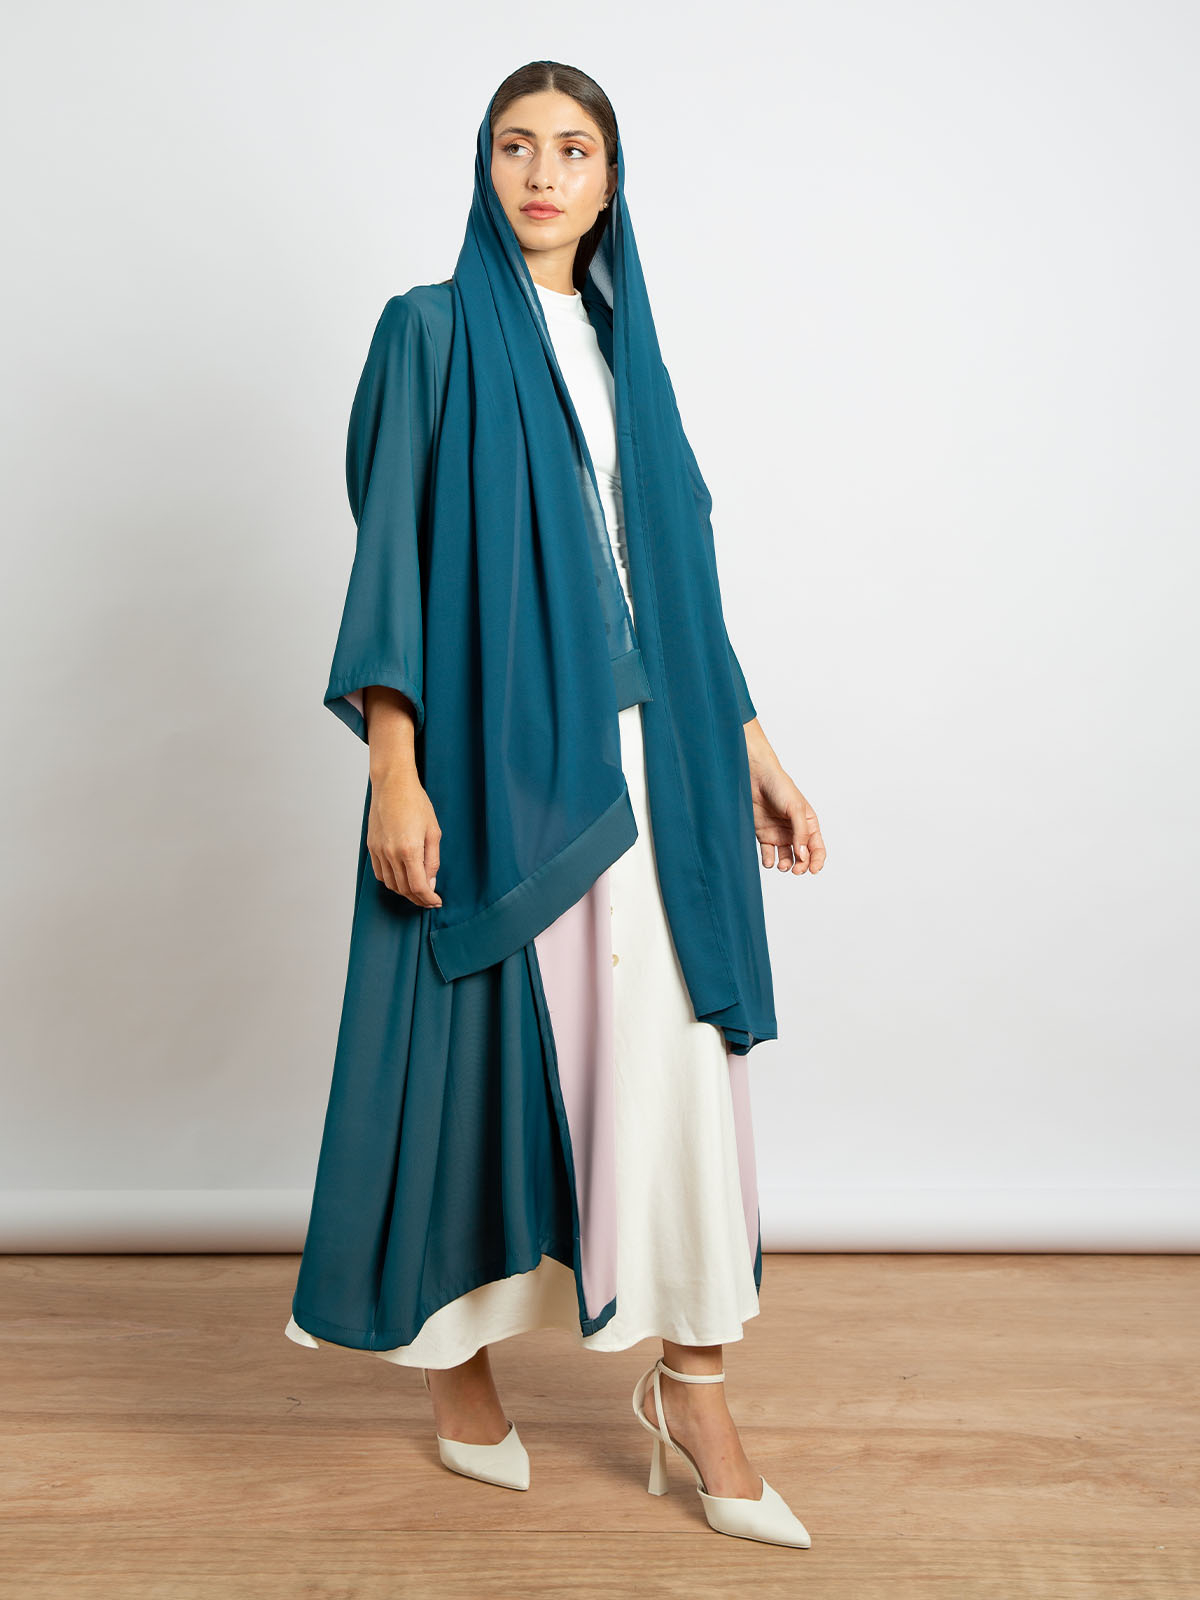 Kaafmeem women clothing regular fit plain teal blue color open midi abaya in crepe fabric